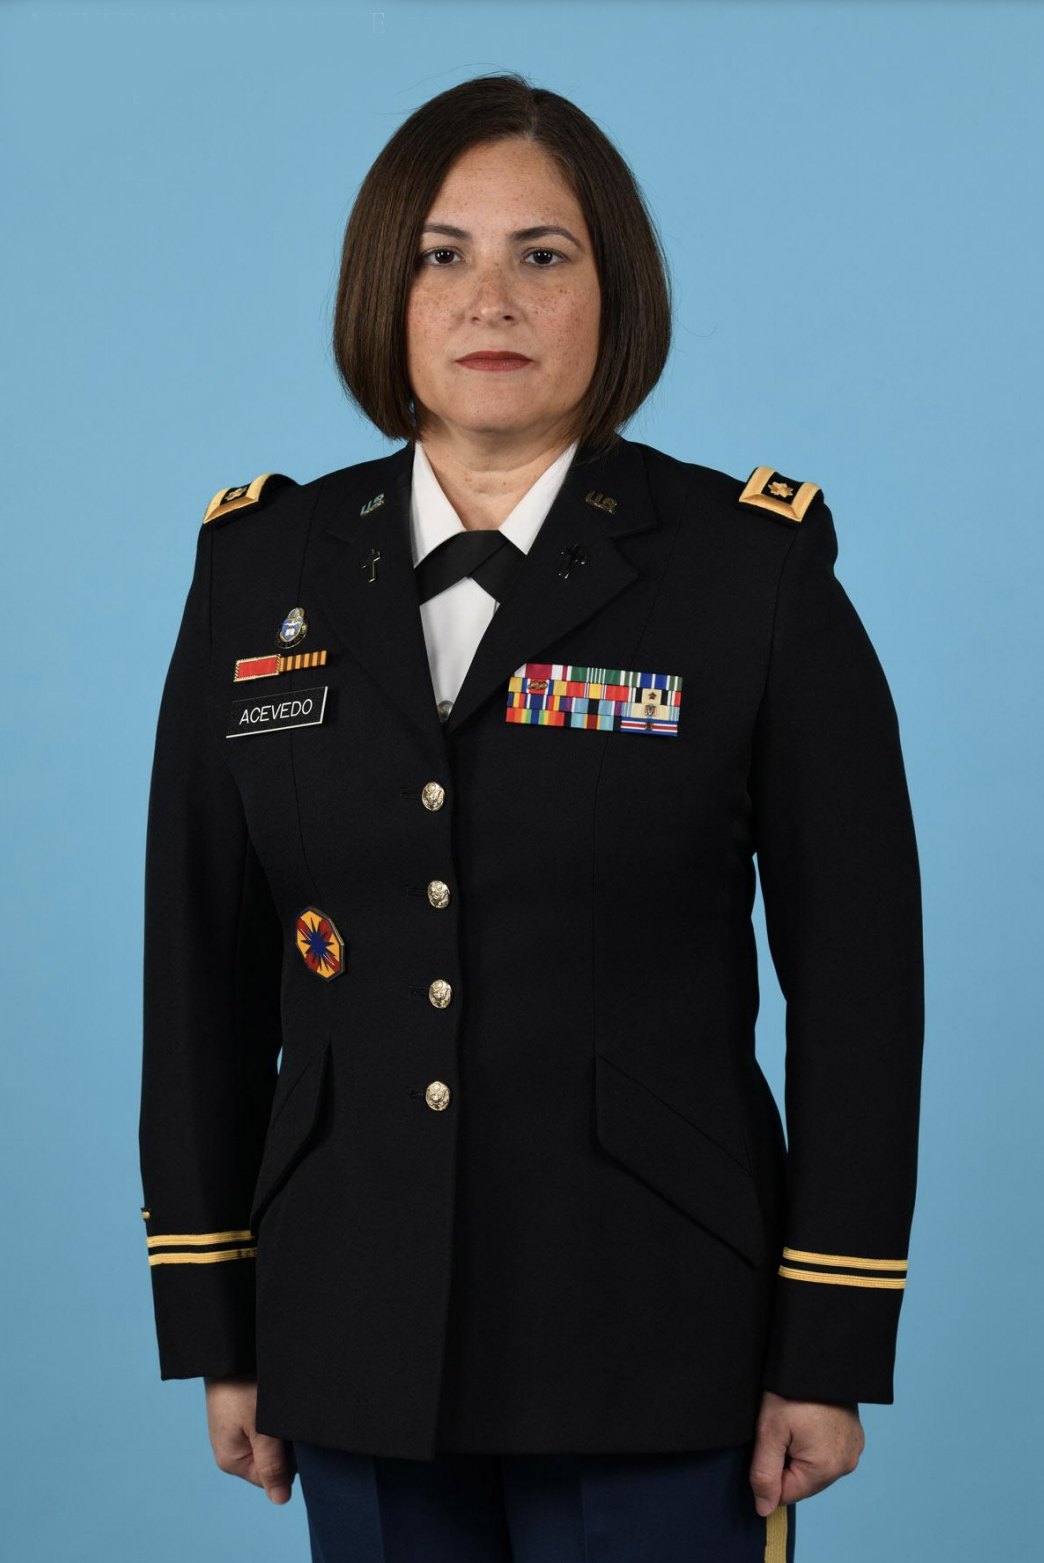 Wanda Acevedo portrait in her uniform